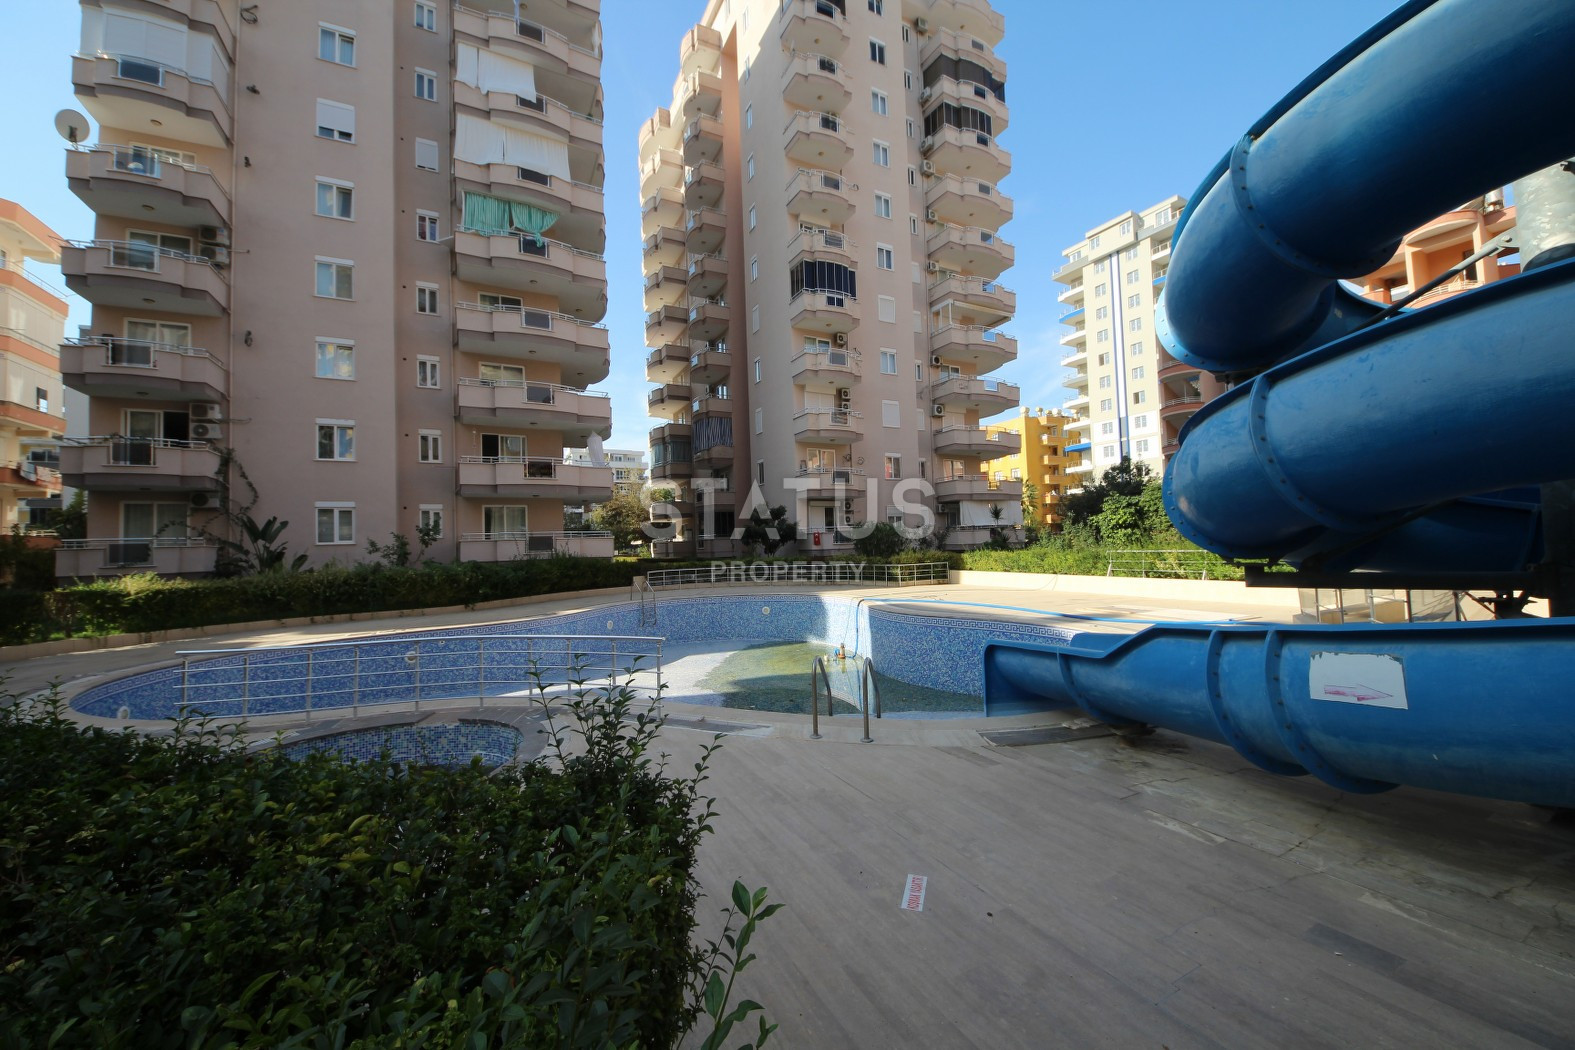 Spacious 2+1 apartments with good location in Mahmutlar. 120m2 фото 1